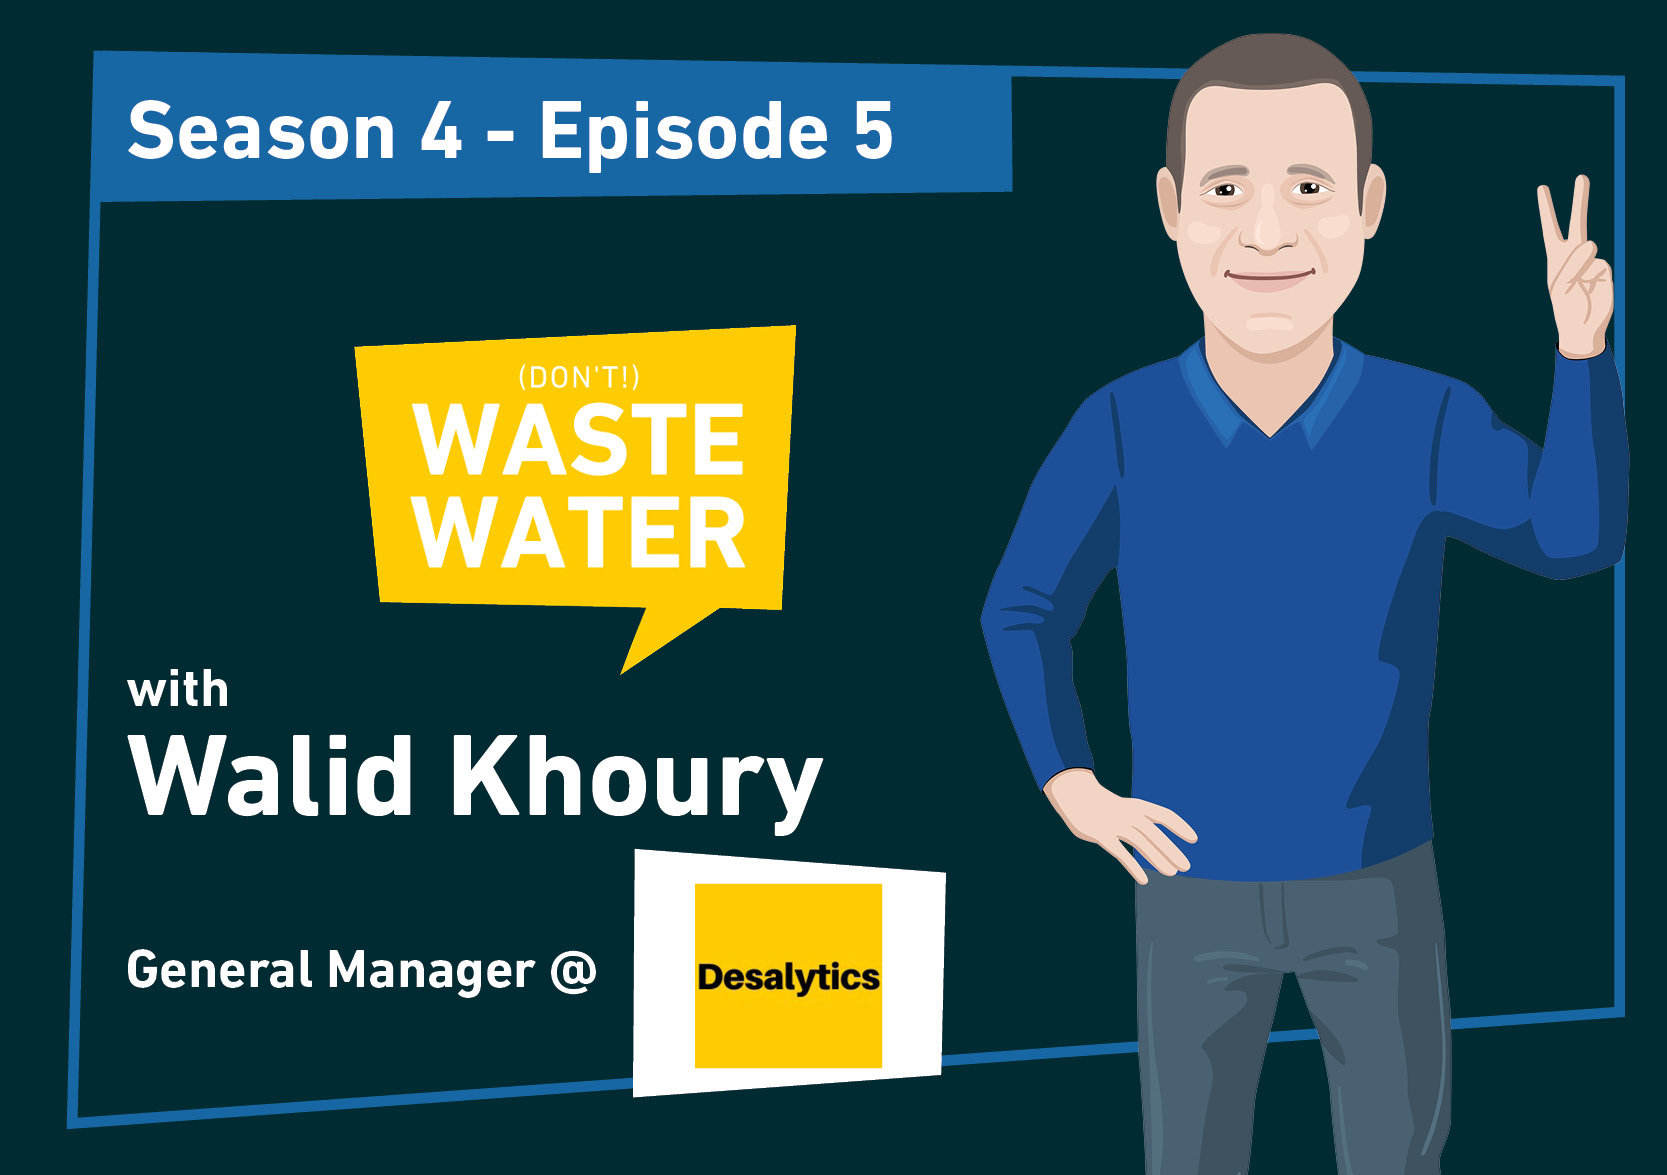 Walid Khoury - Desalytics - Sub-Saharan Africa Water